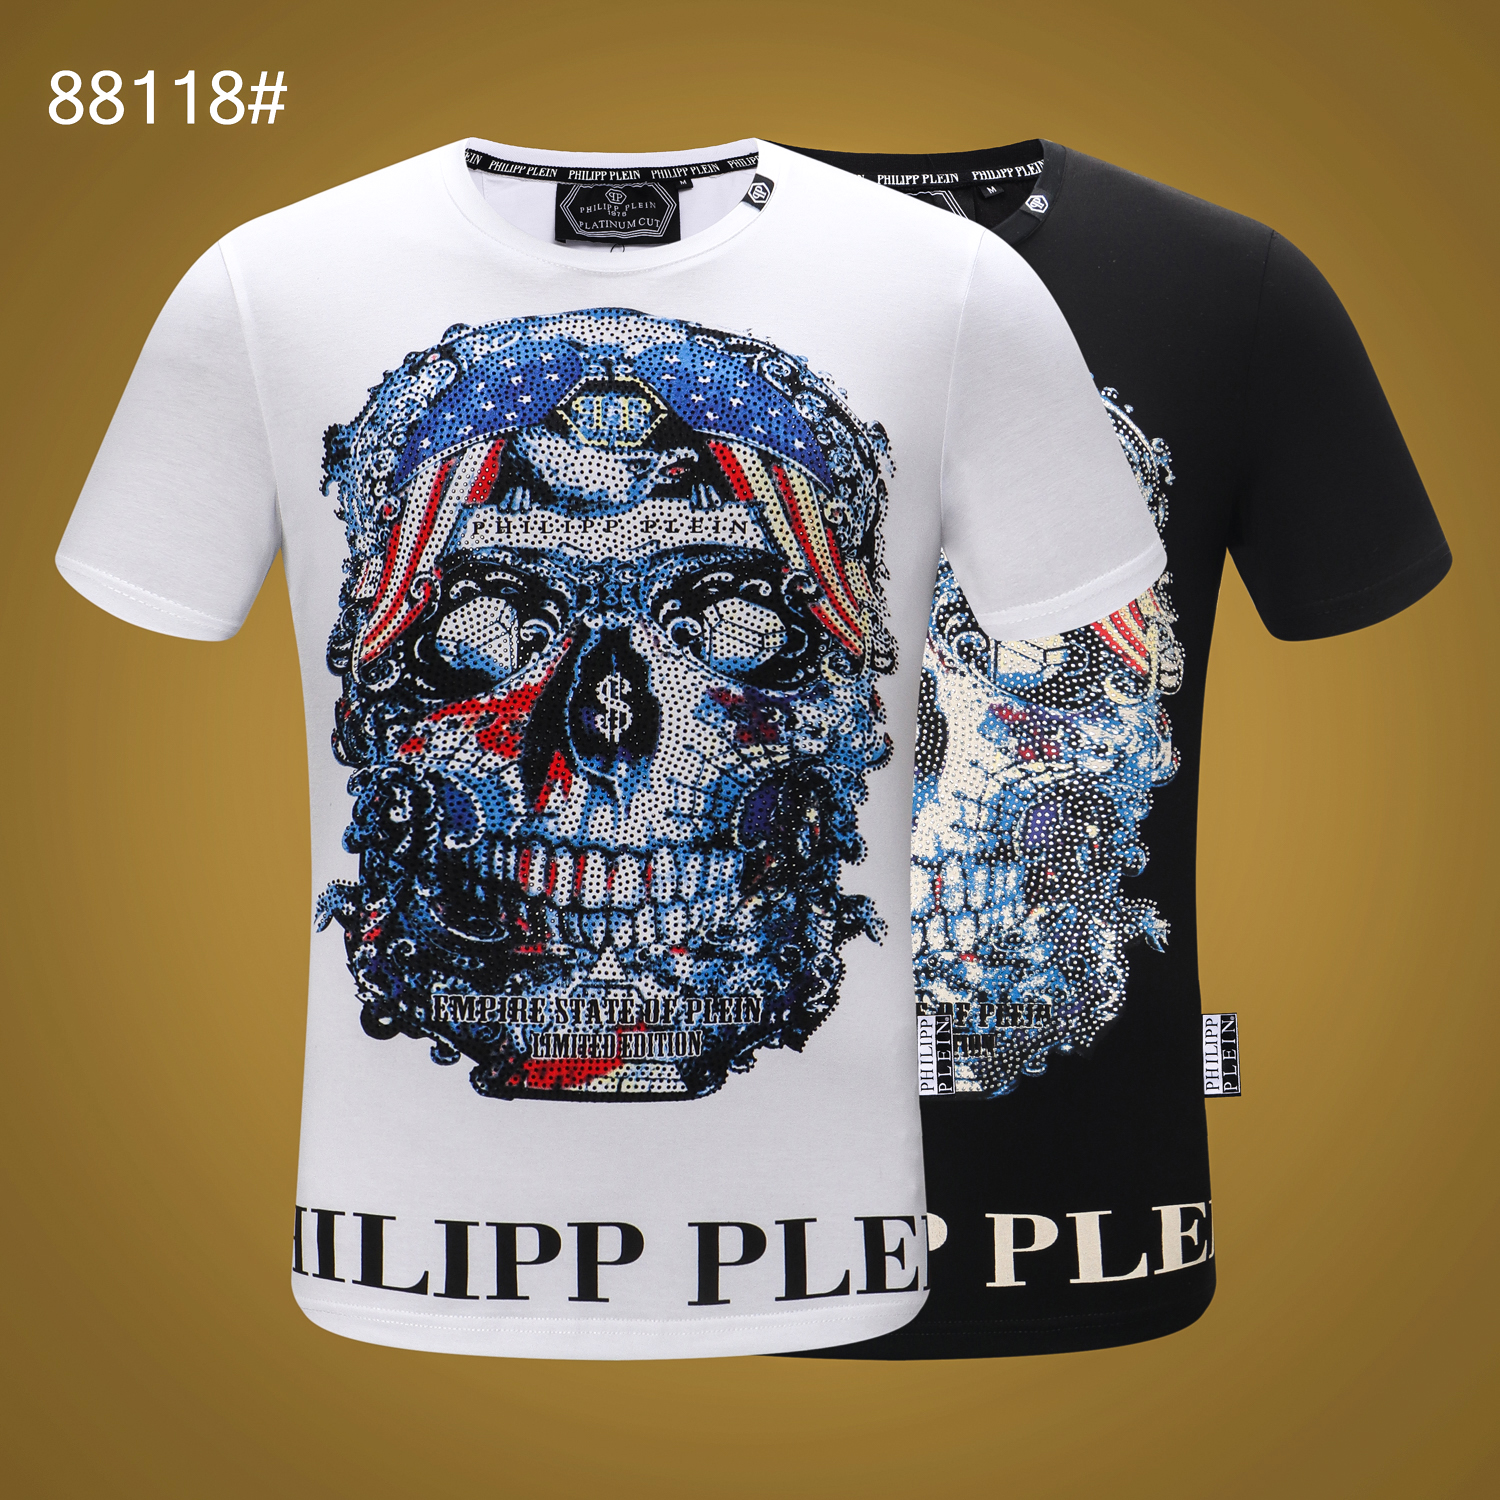 philipp plein t shirt price in india